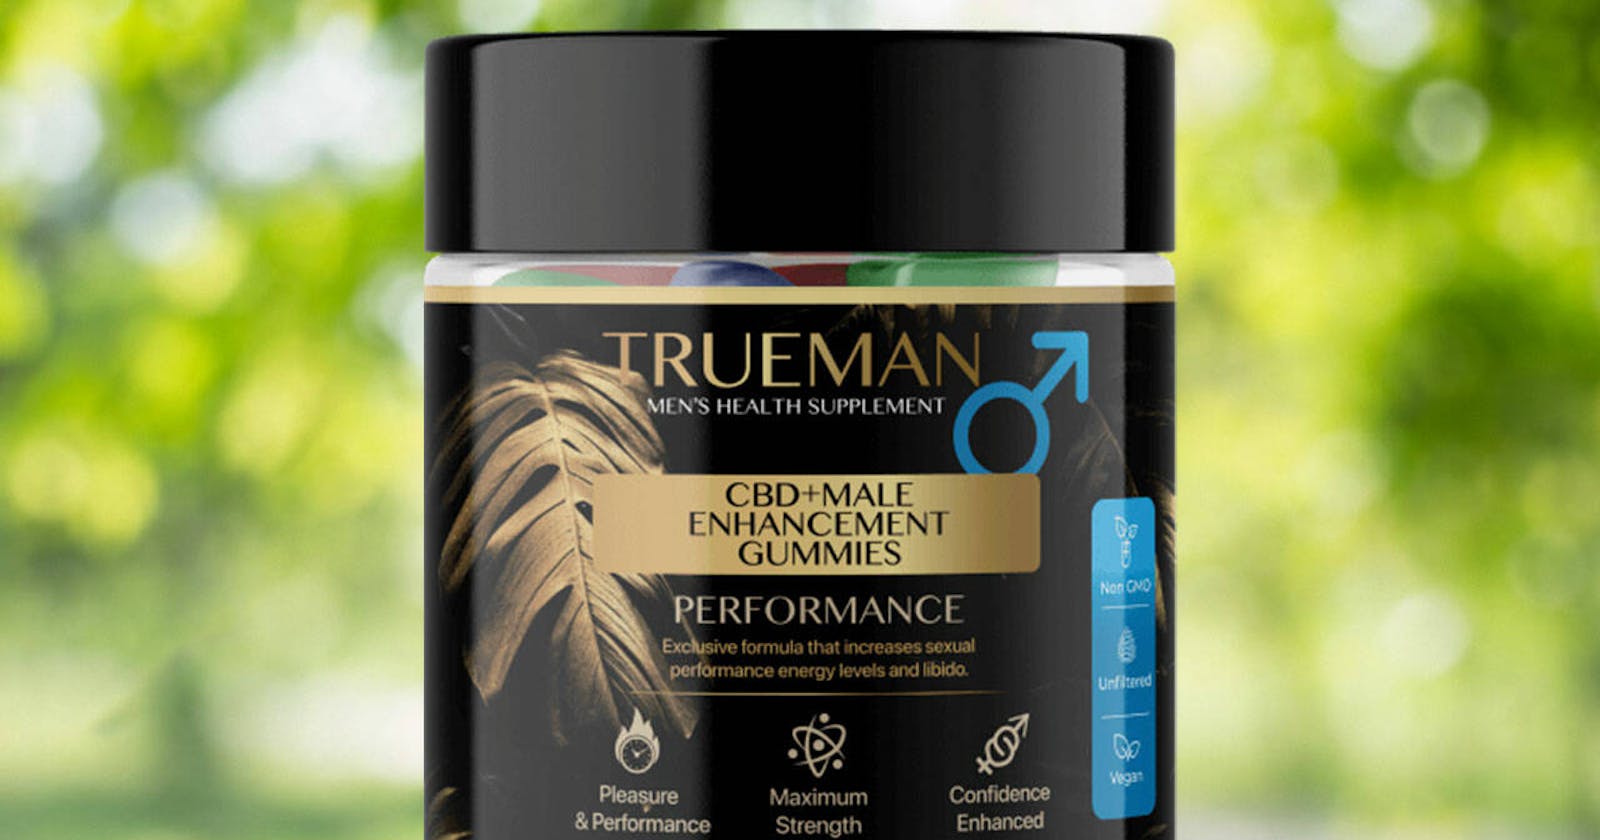 TRUEMAN Male Enhancement Gummies Review – Negative Complaints or Real Truman CBD+ Gummies?